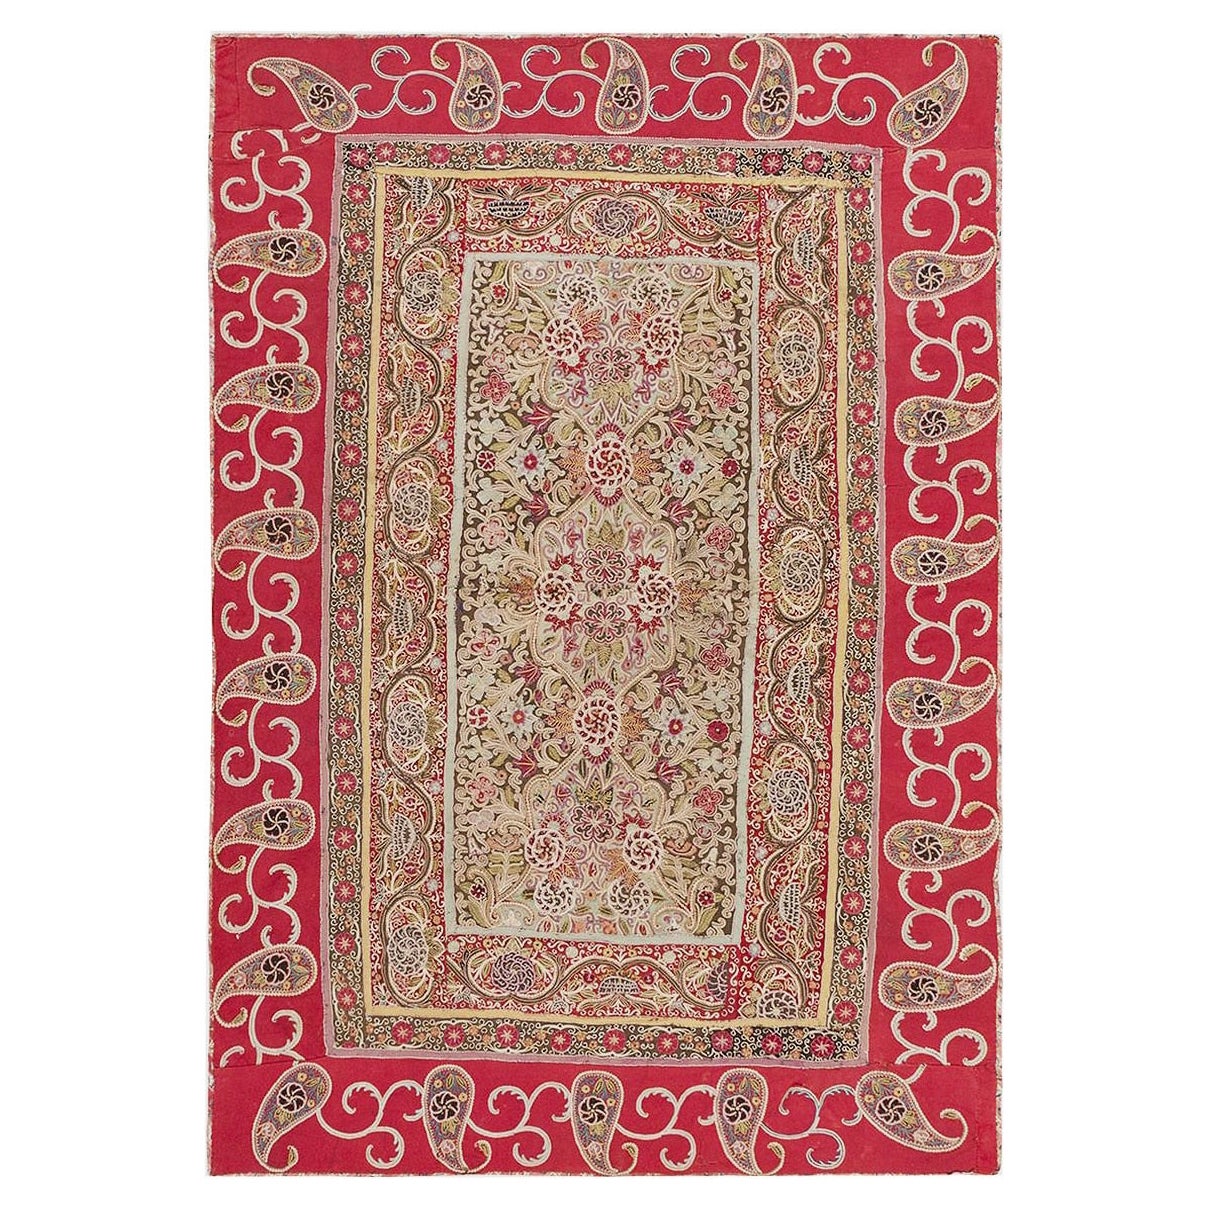 Antique Persian Paisley Rashti Embroidery Textile 3'10" x 5'7" For Sale